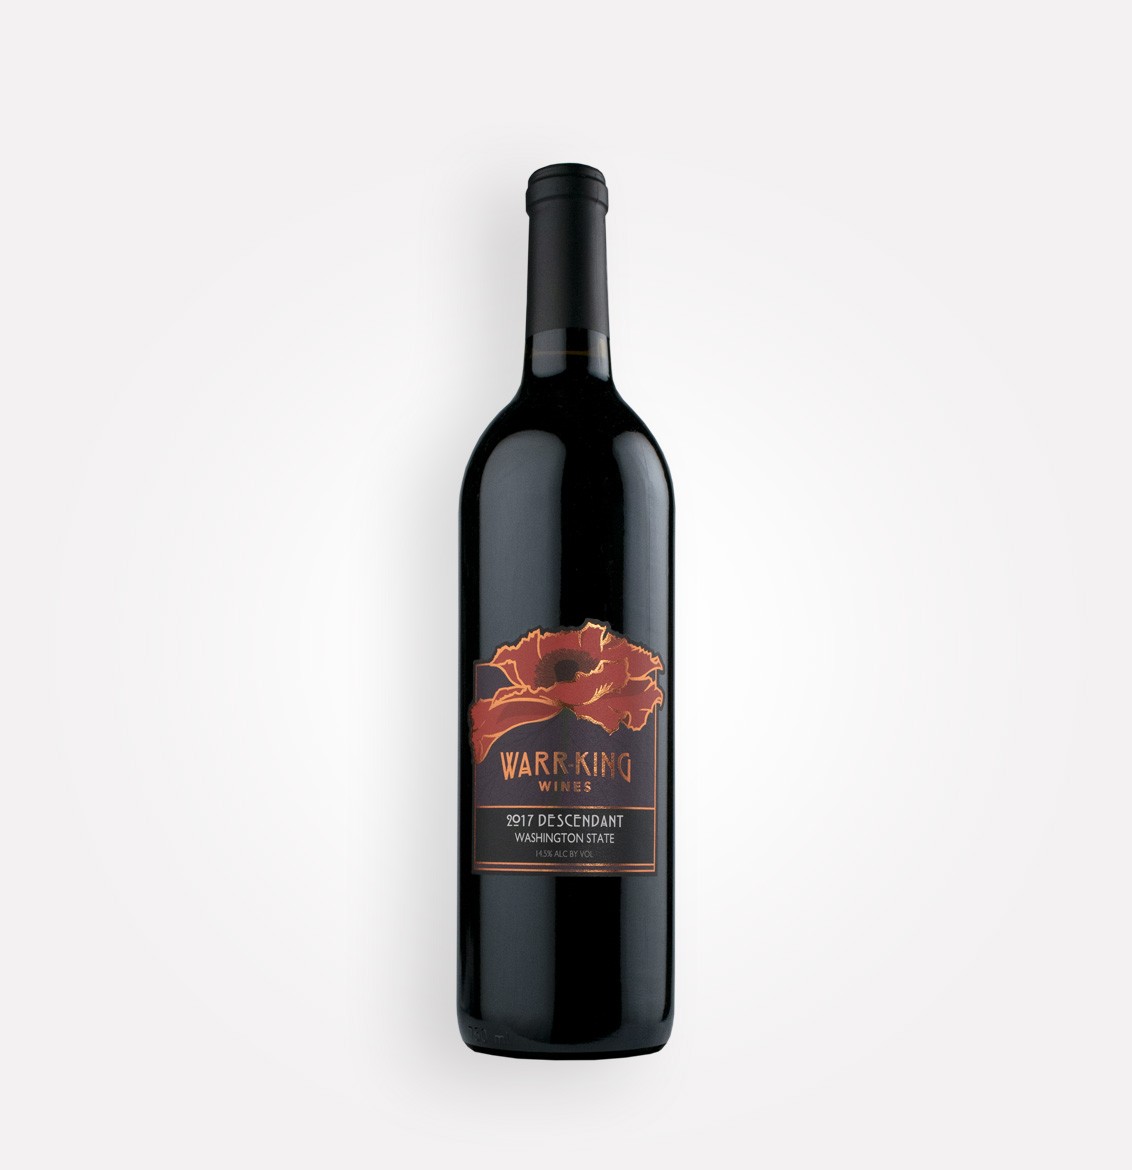 Bottle of Warr-King 2017 Descendant red wine blend from three Washington AVA's